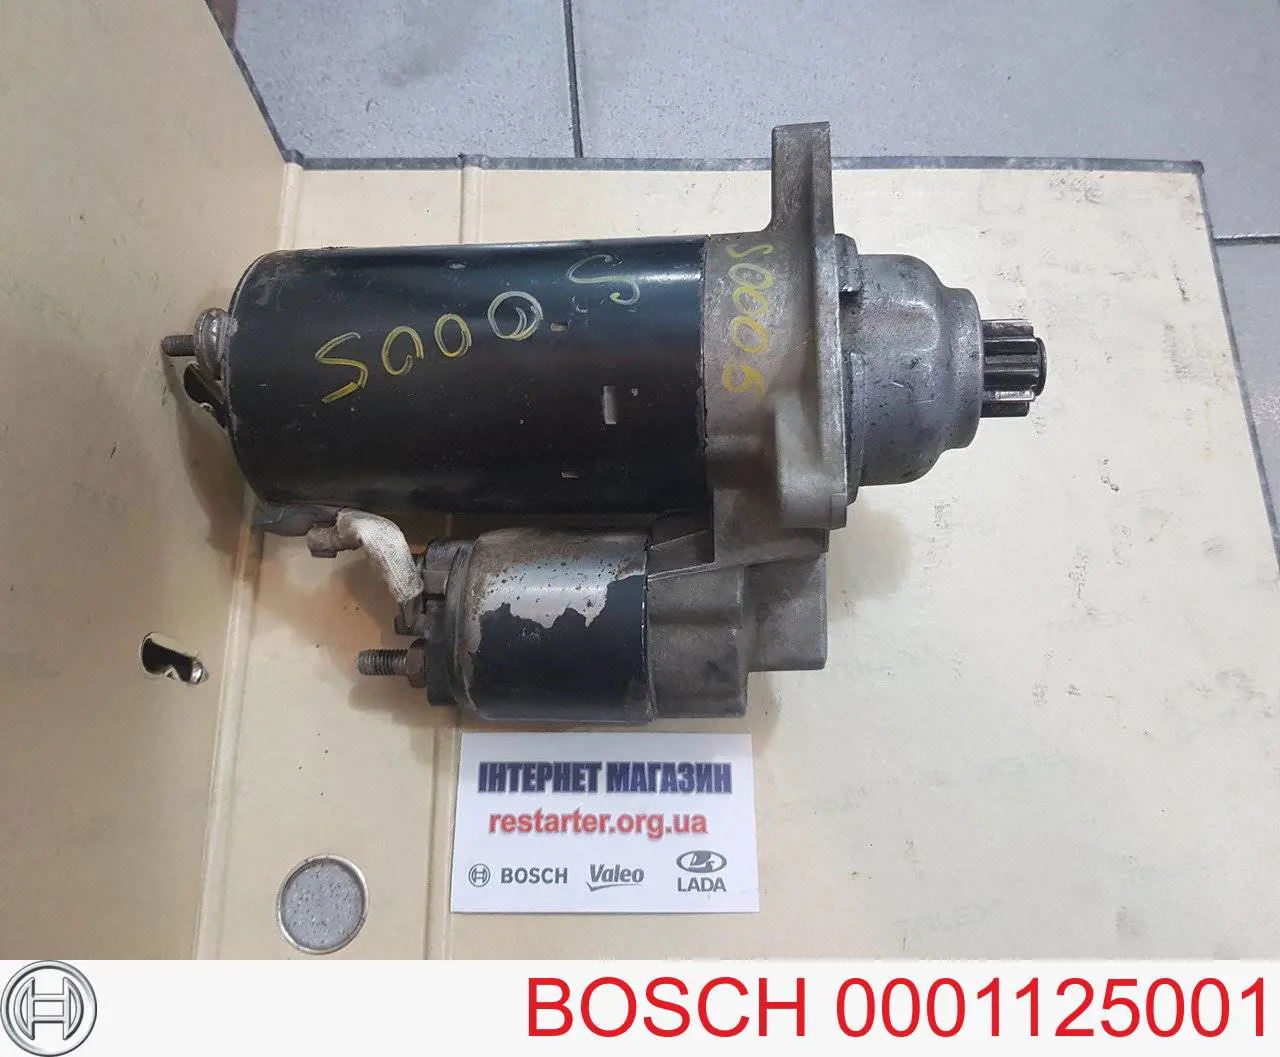 0001125001 Bosch стартер